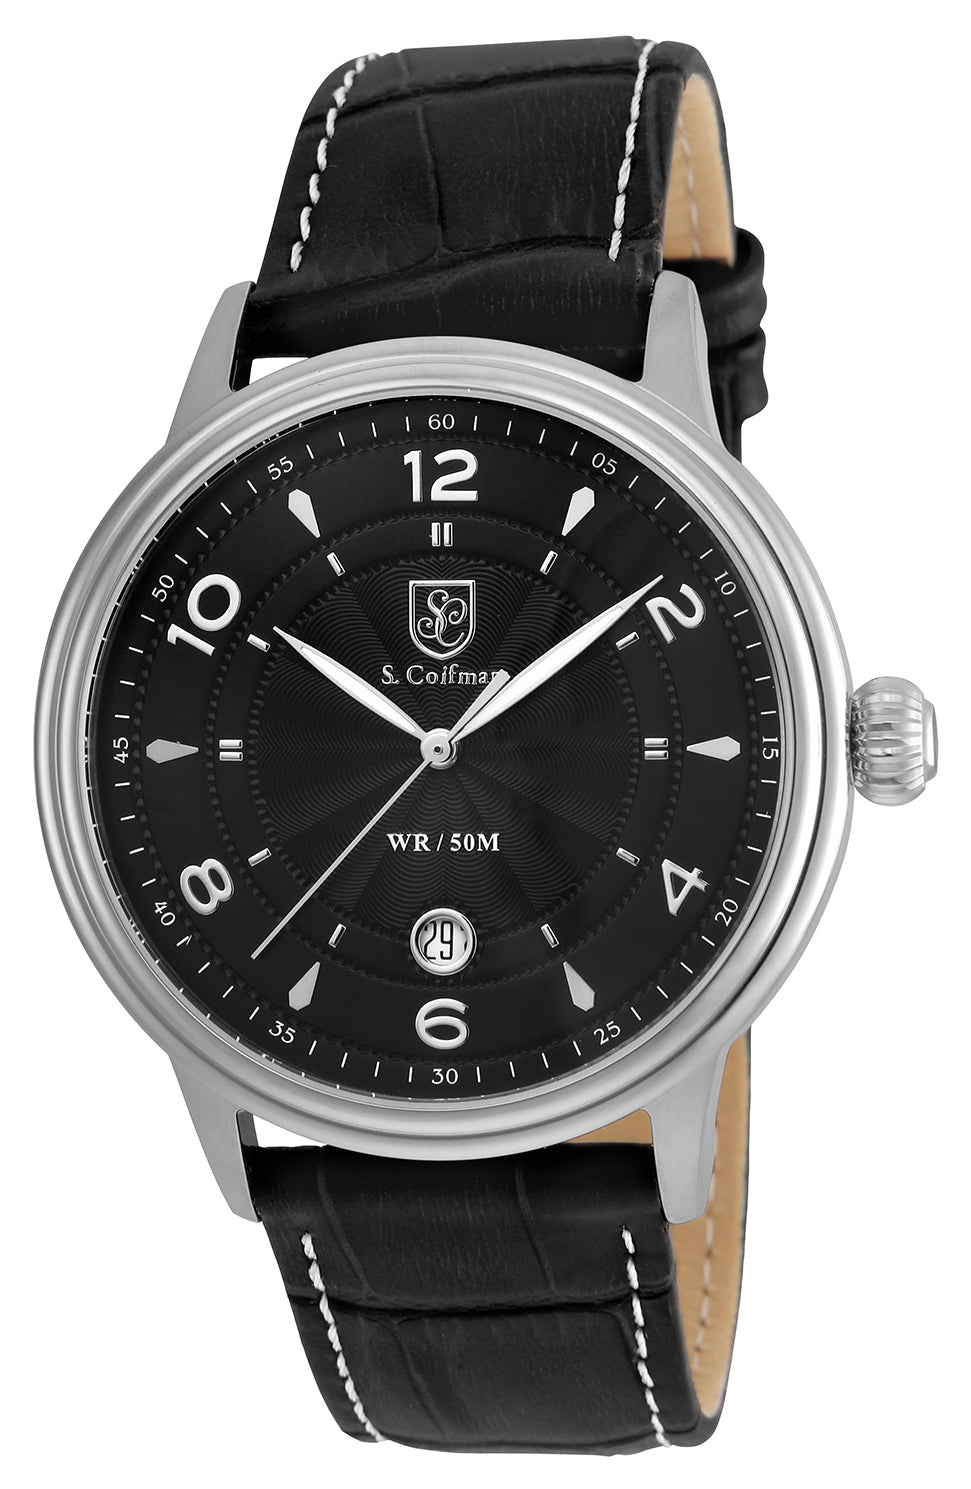 Invicta Men's SC0375 S.Coifman Quartz 3 Hand Black Dial Watch